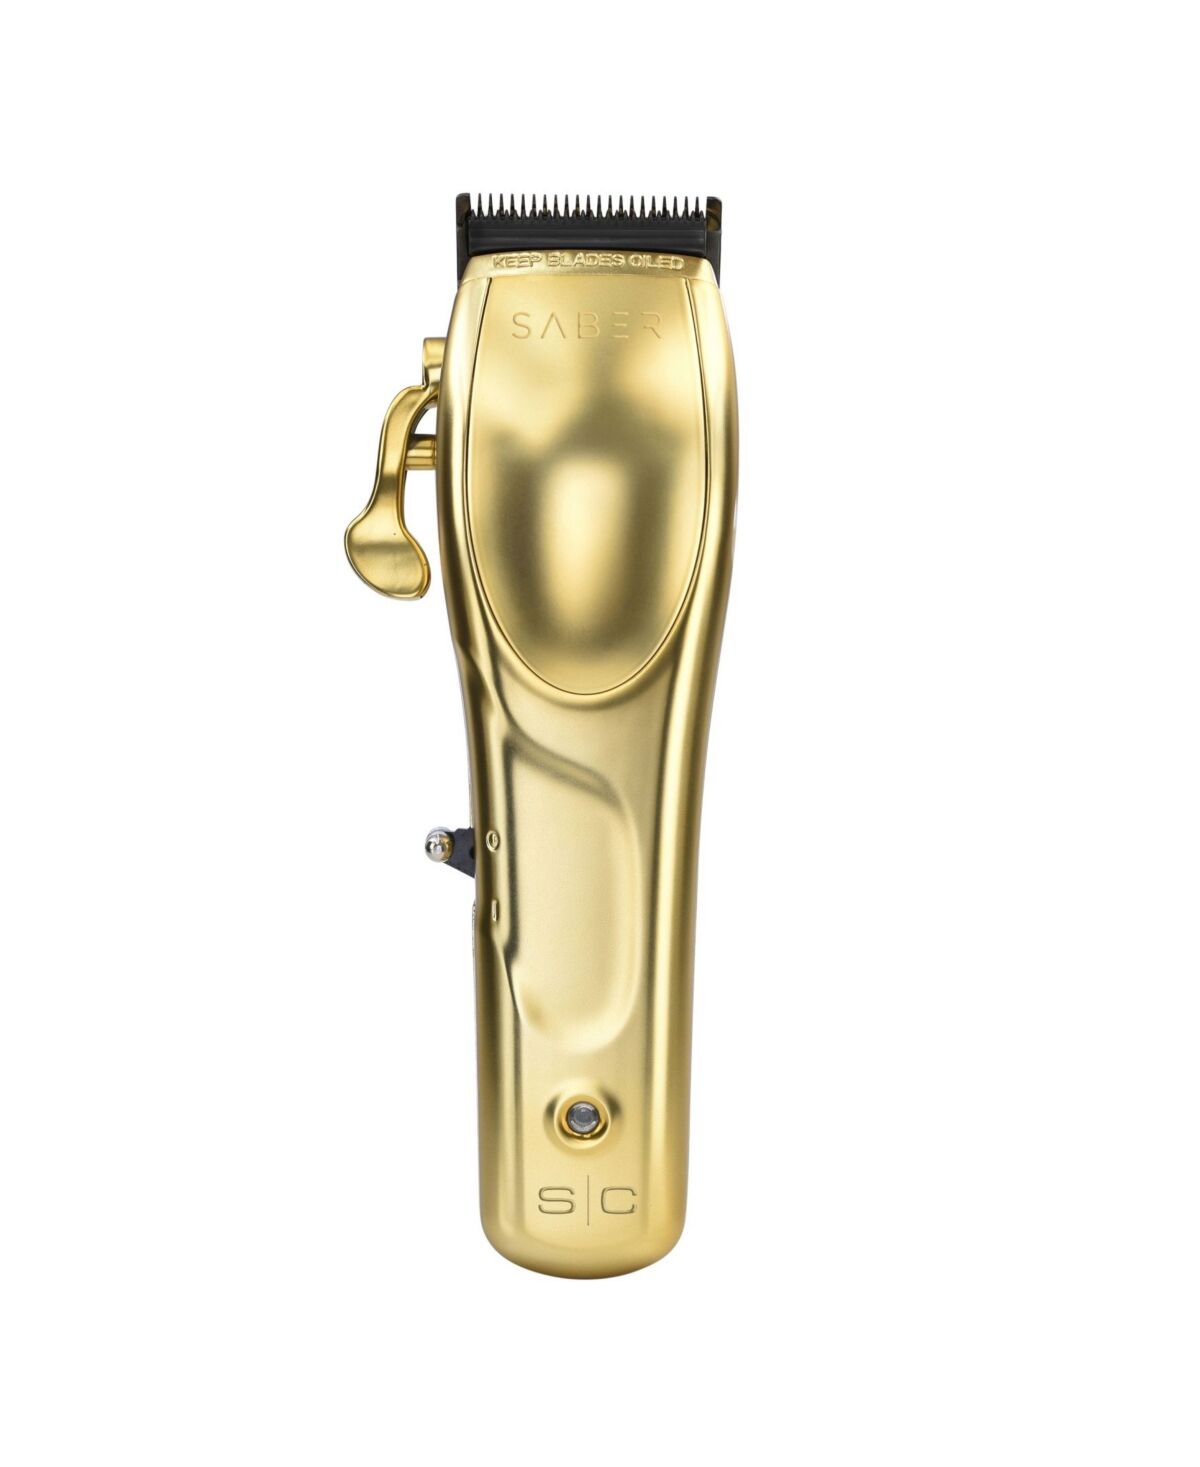 StyleCraft Professional Saber Men's Cordless Hair Clipper - Gold-Tone